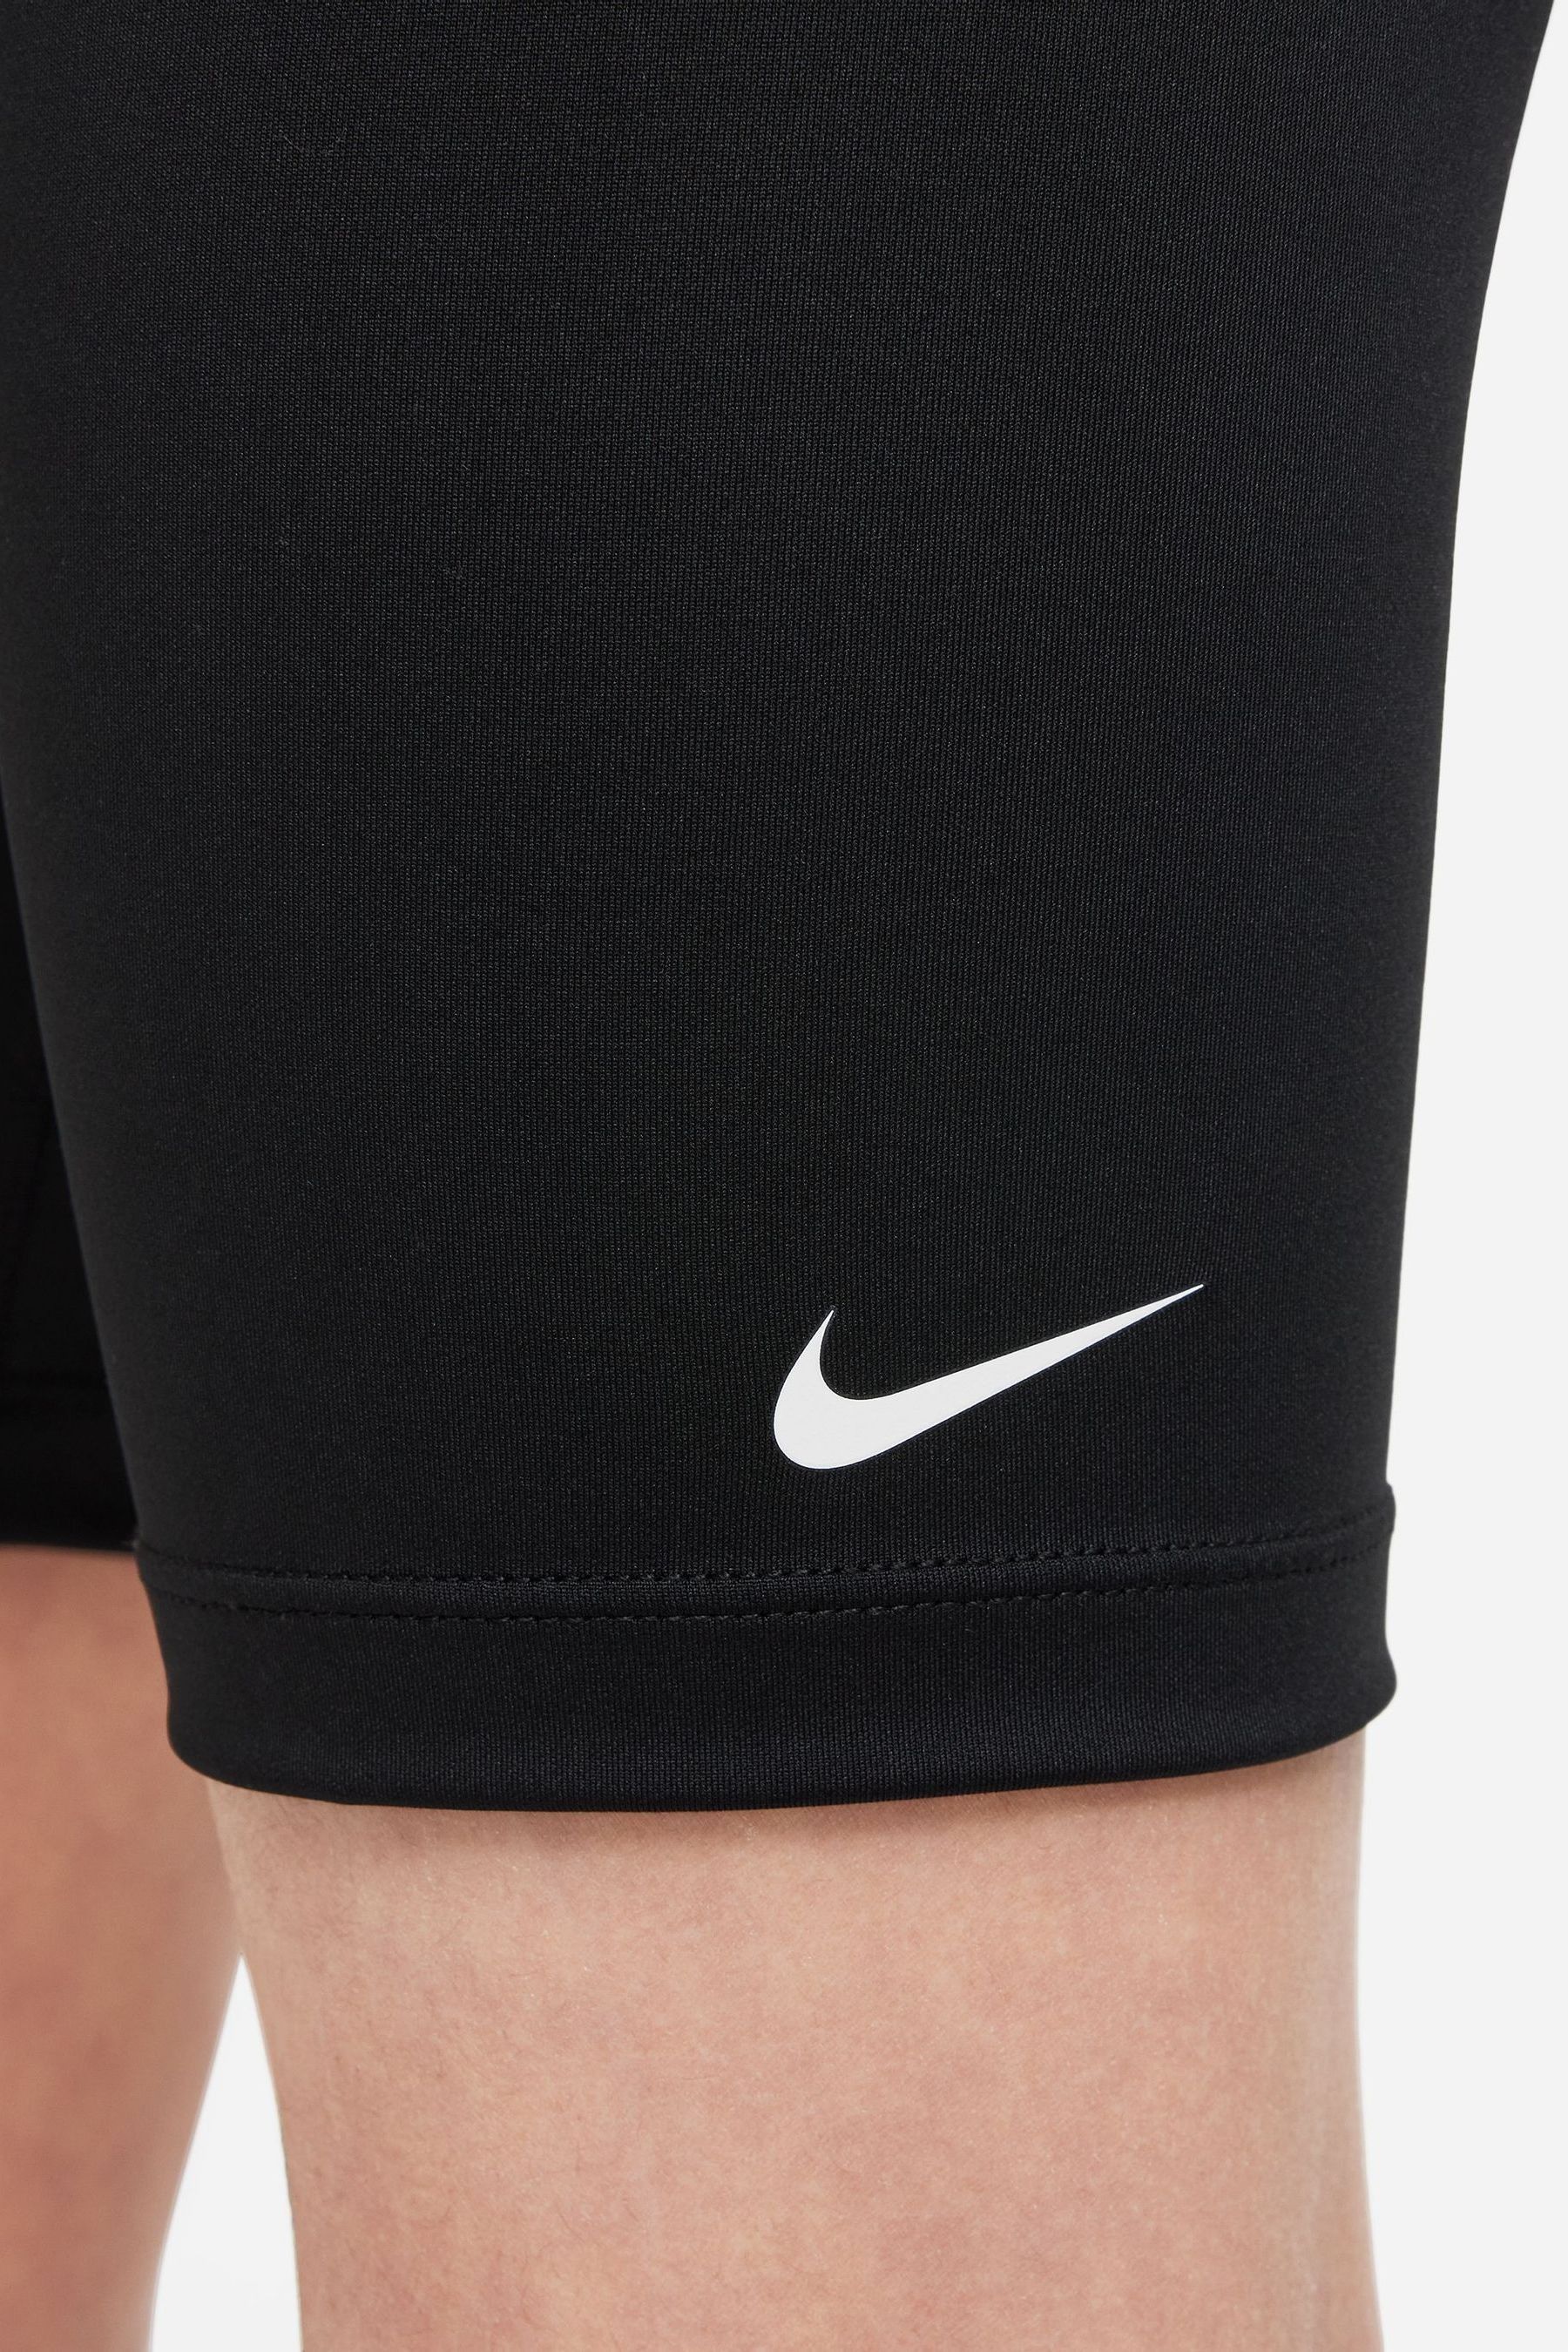 Buy Nike Black DriFIT Cycling Shorts from the Next UK online shop